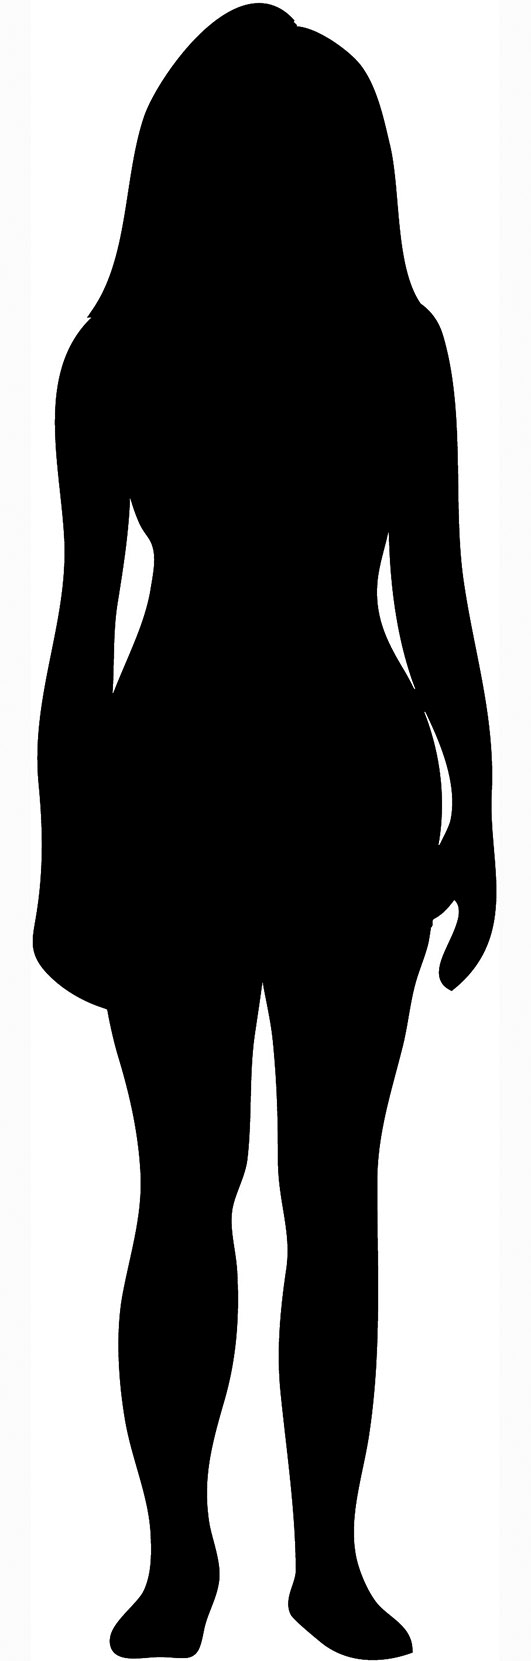 Silhouette Woman - Cliparts.co